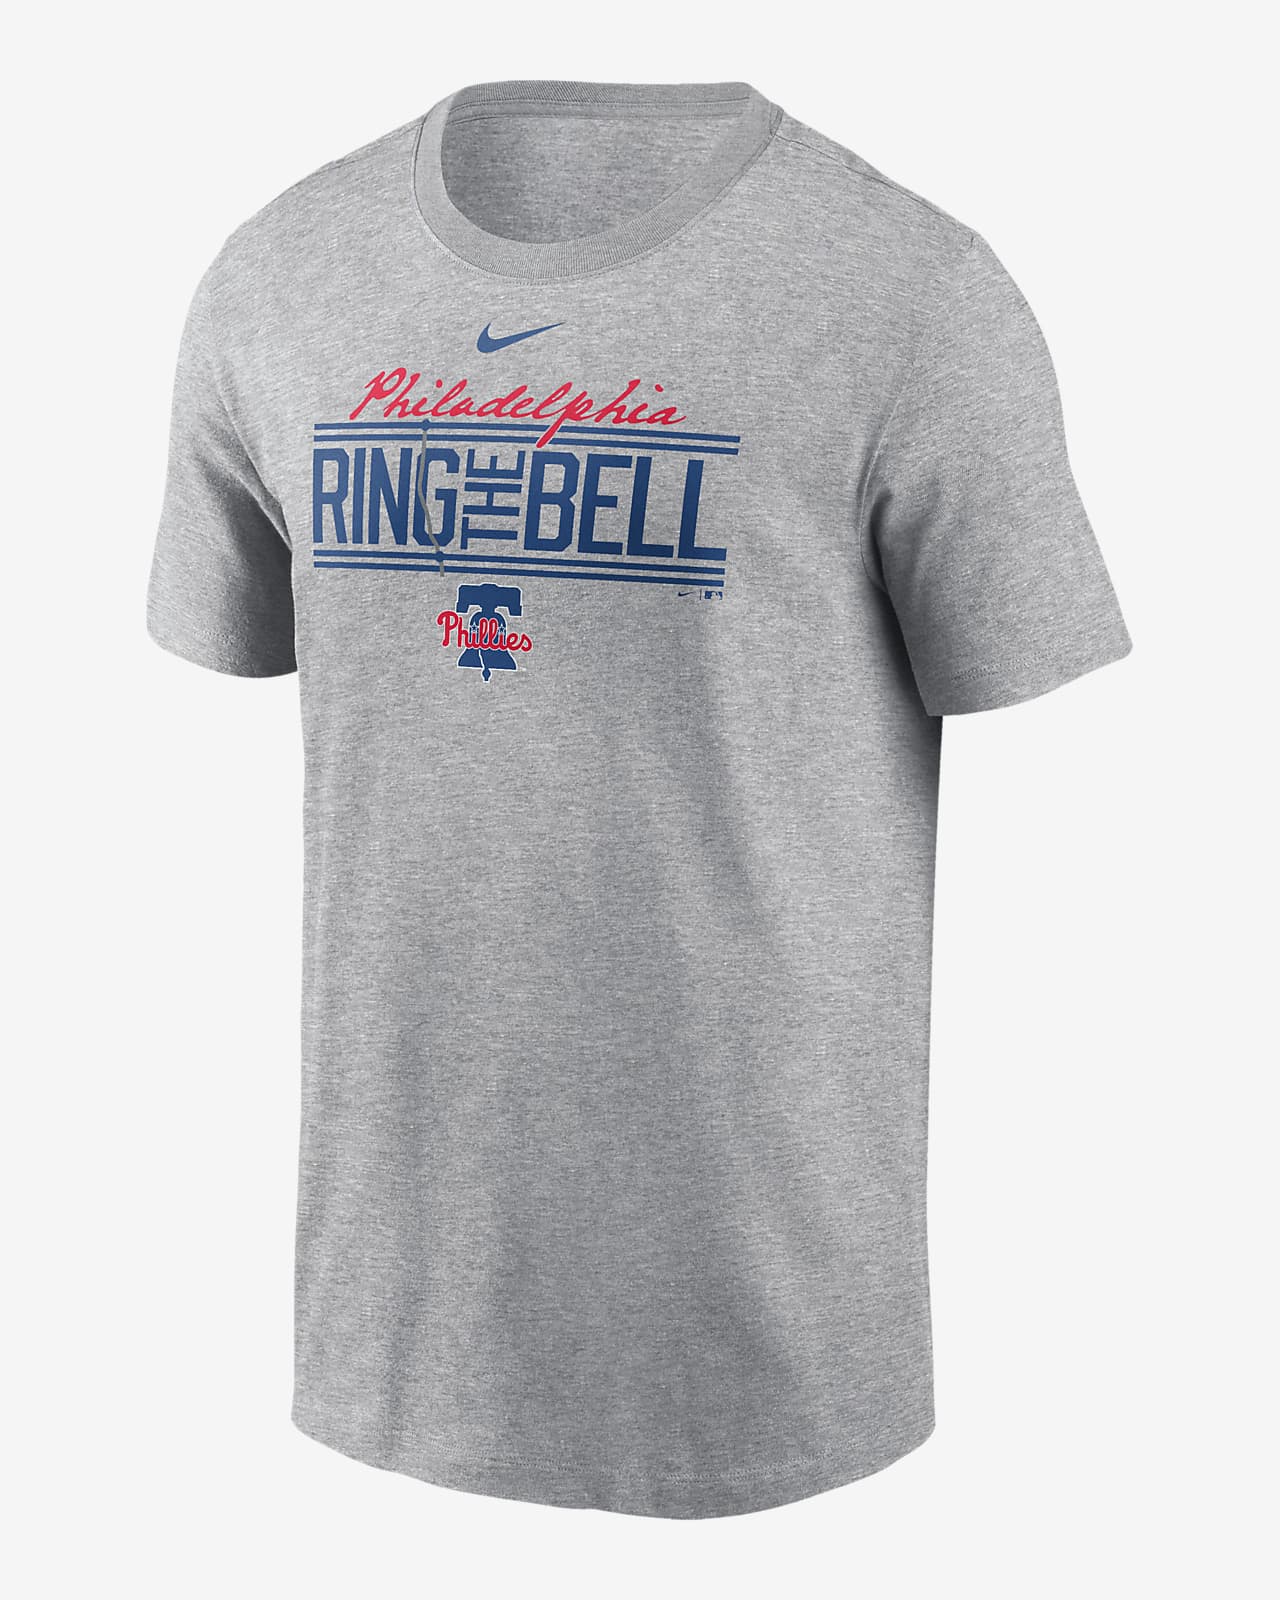 Philadelphia Phillies ring the bell 4 stars logo tee, hoodie